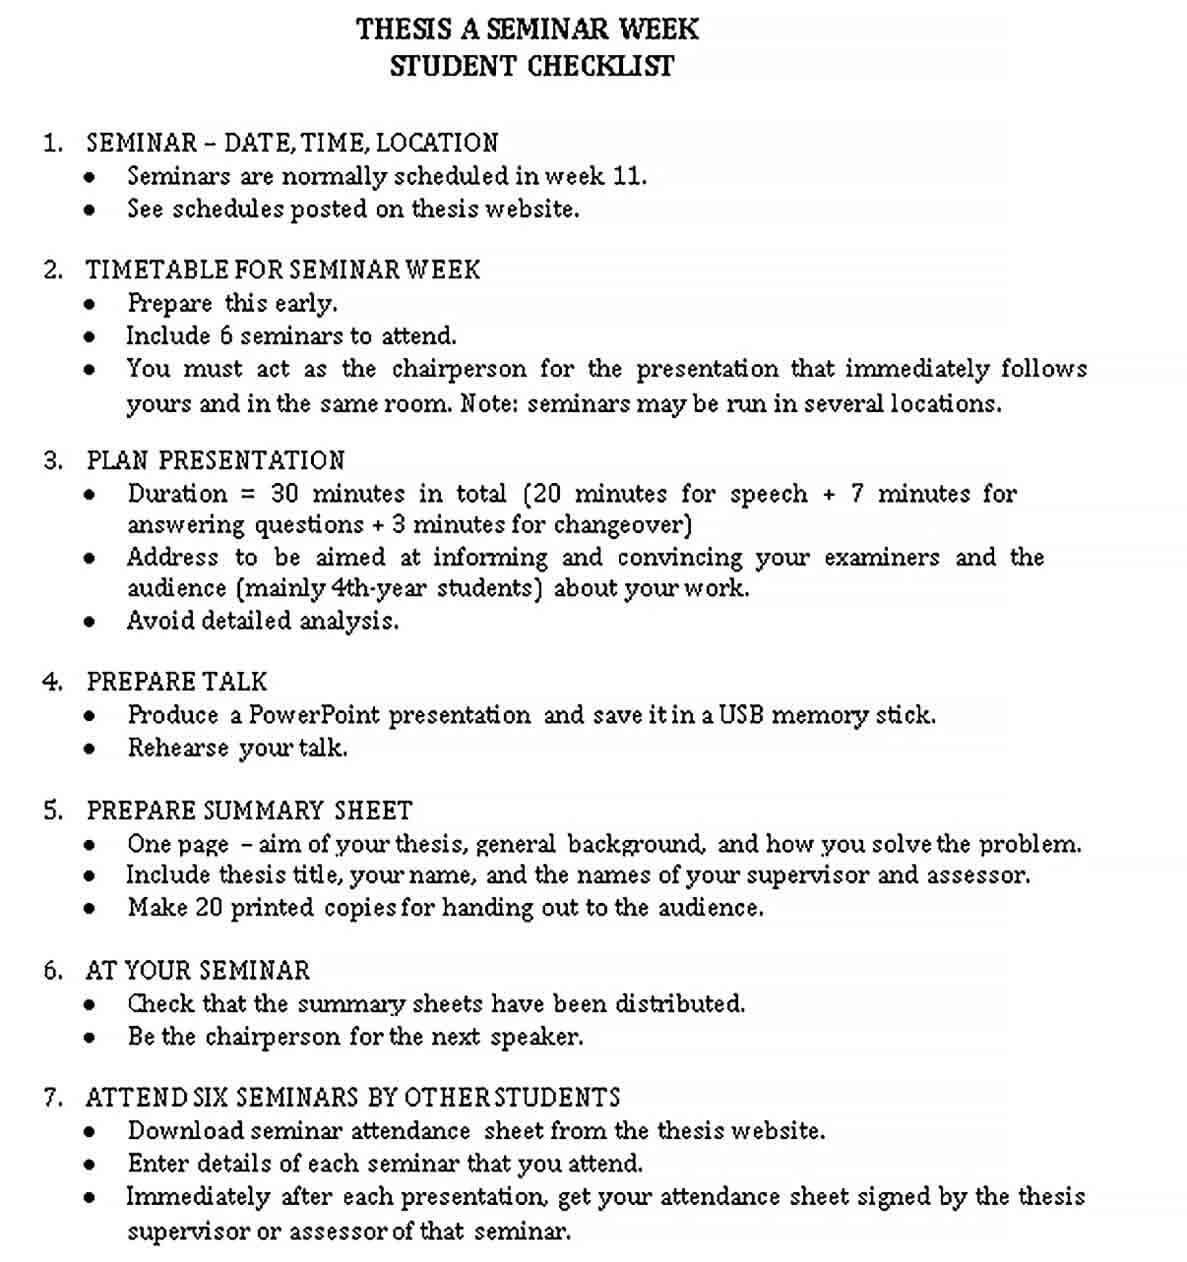 Sample Student Seminar Checklist